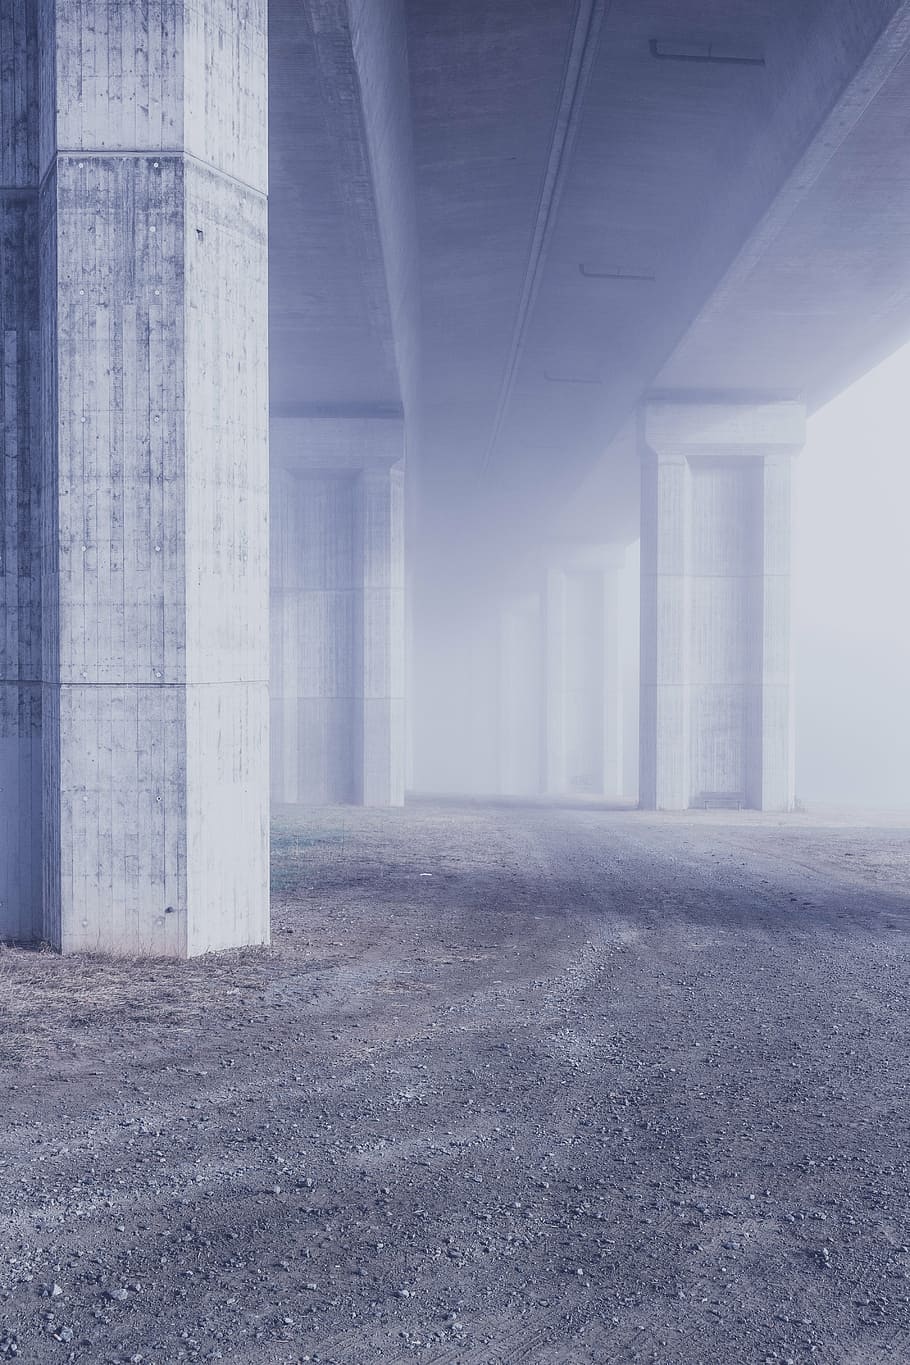 foggy, gray, concrete, bridge, pillar, architecture, structure, building, road, transition